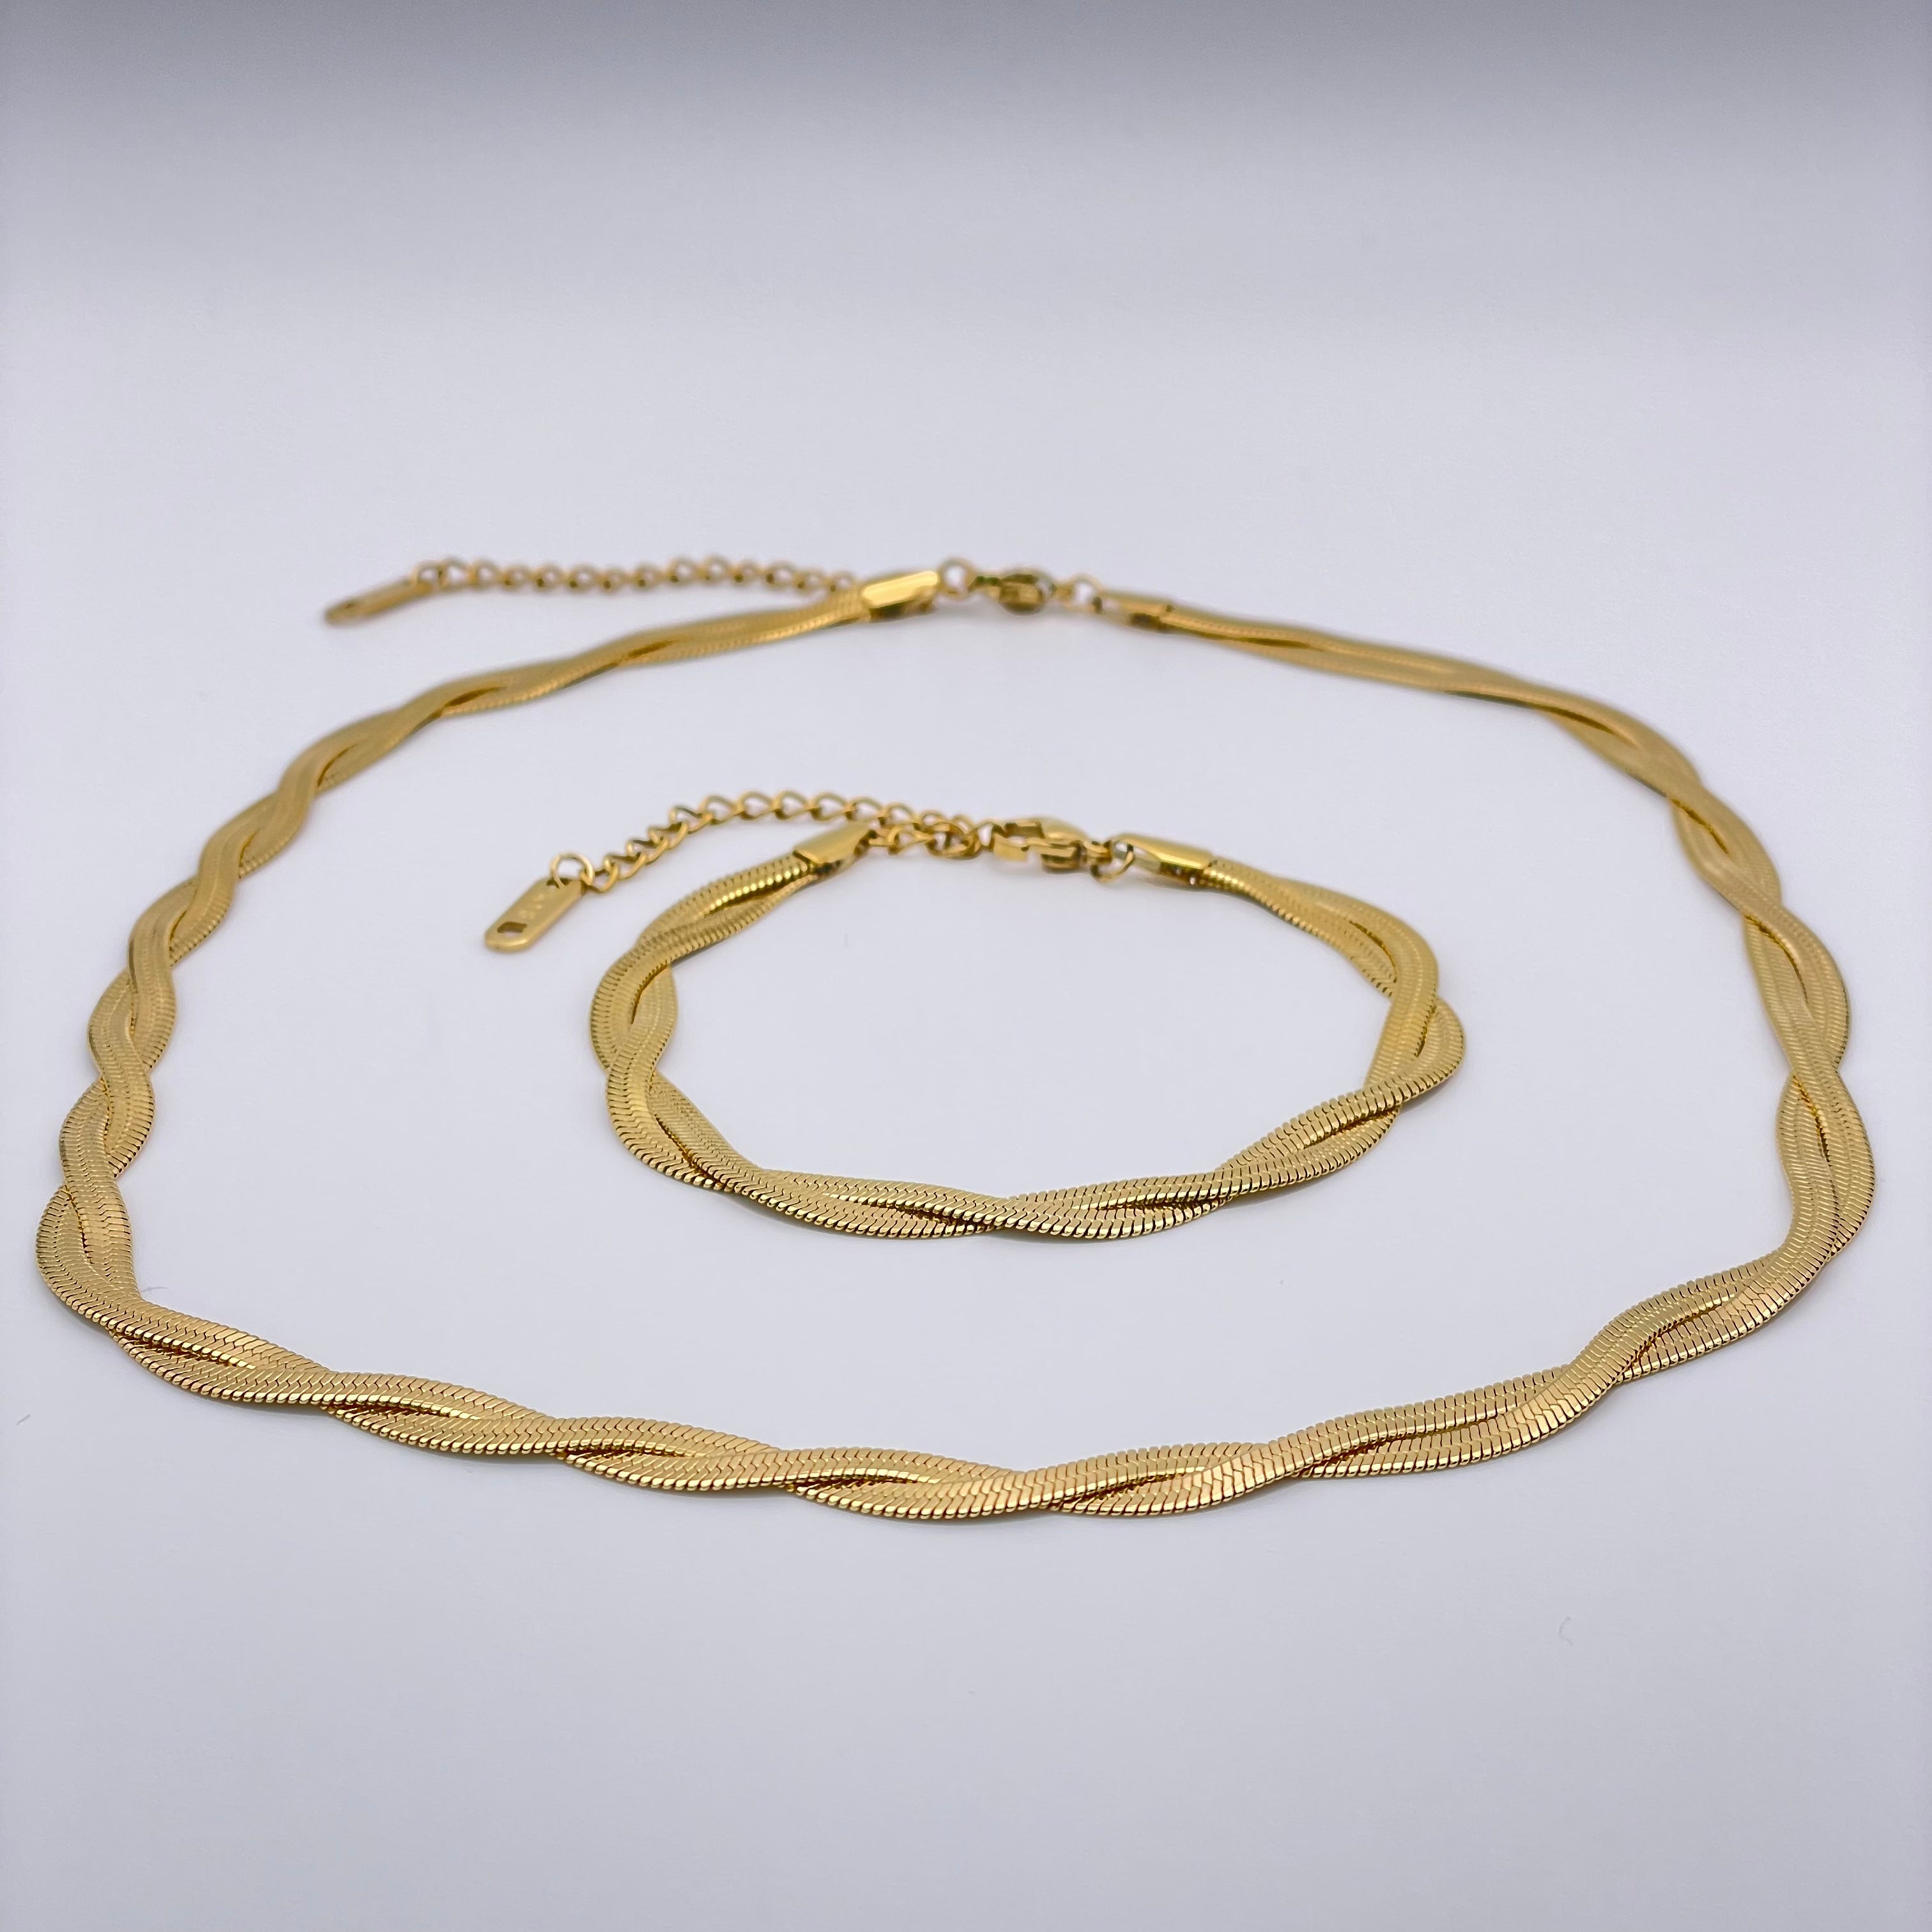 Gold Herringbone Chain for Men 18K Gold Plated Sterling Silver Herringbone  Italy | eBay